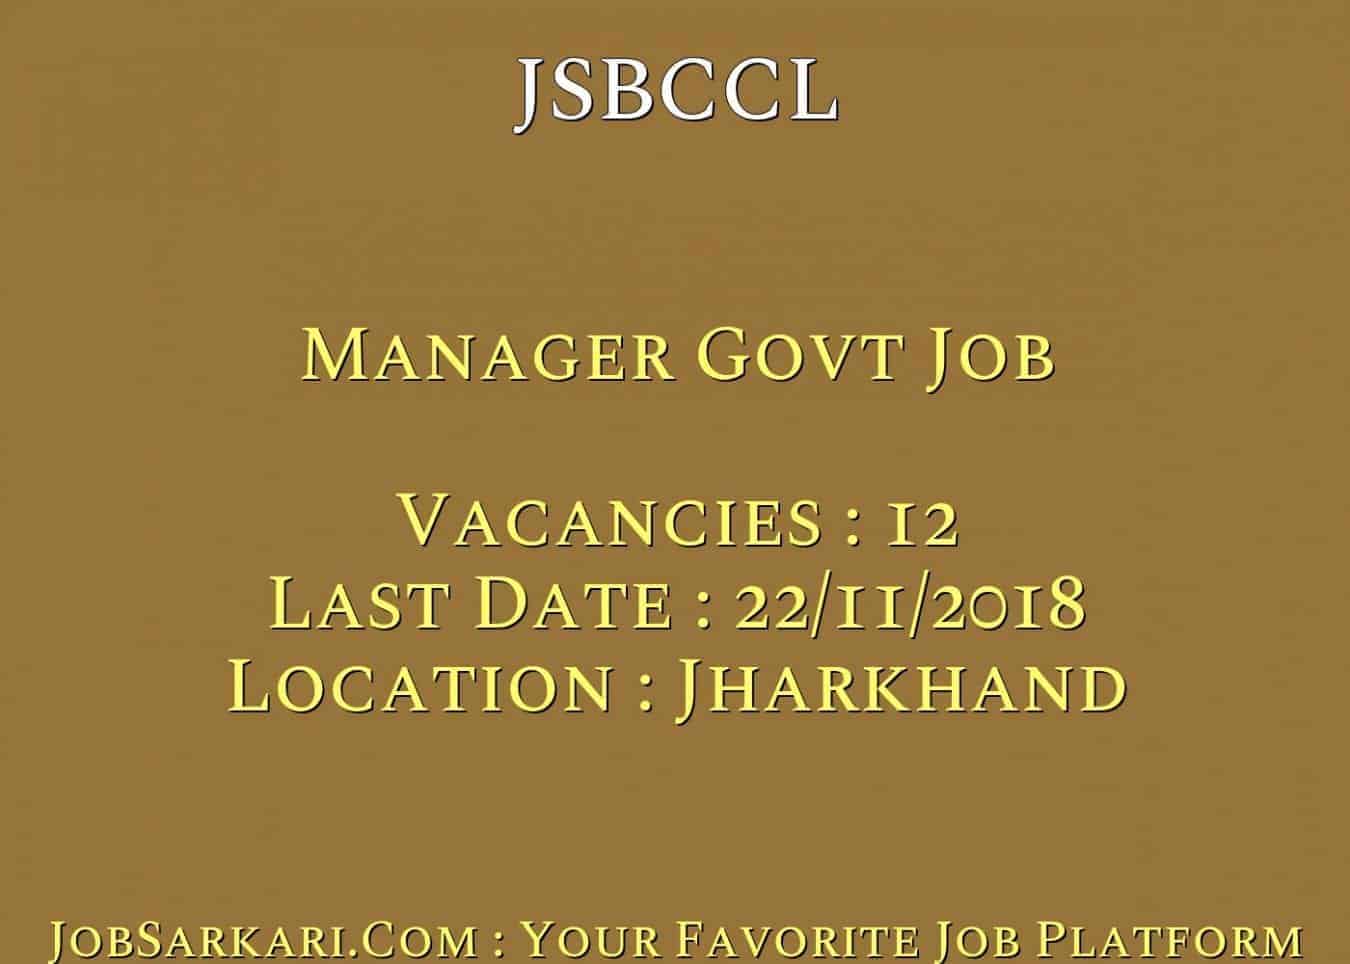 JSBCCL Recruitment 2018 For Manager Govt Job